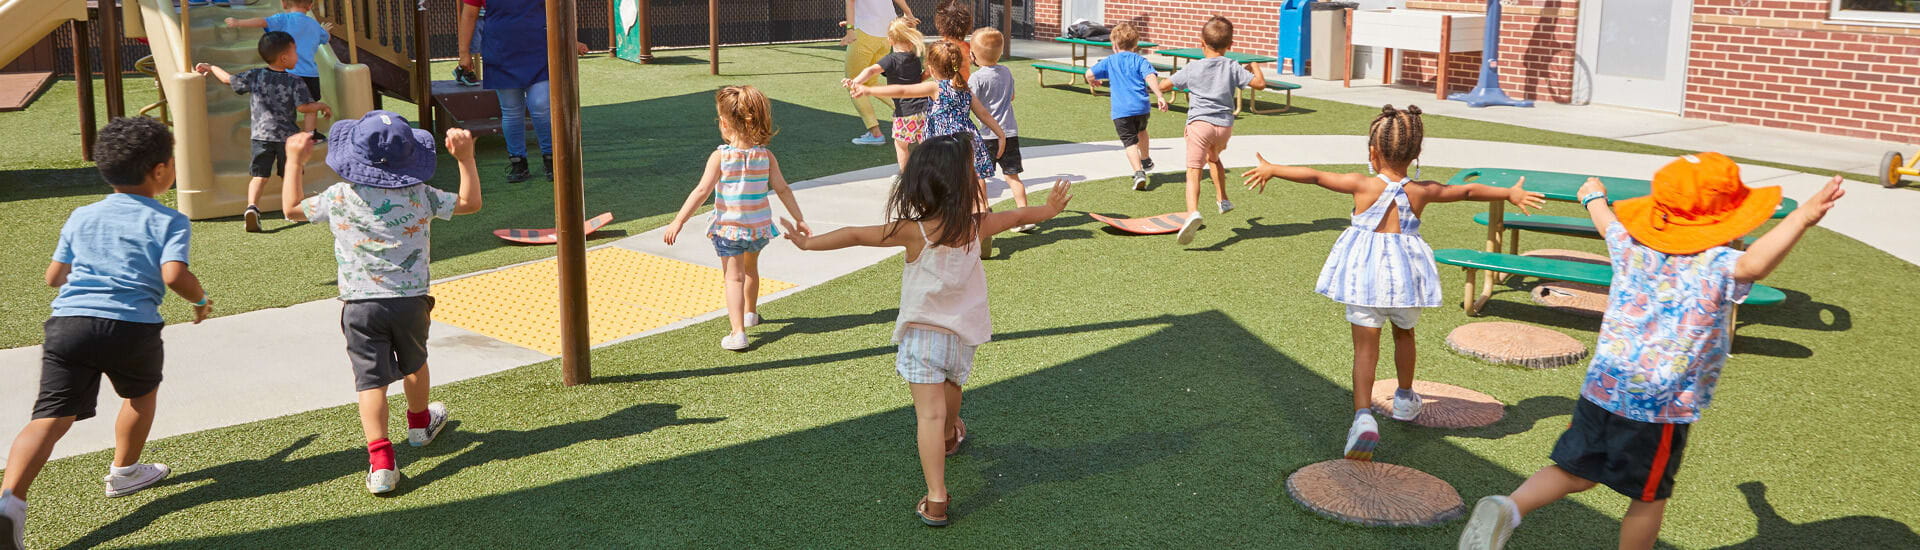 Sunnyvale KinderCare, Daycare, Preschool & Early Education in Sunnyvale,  CA